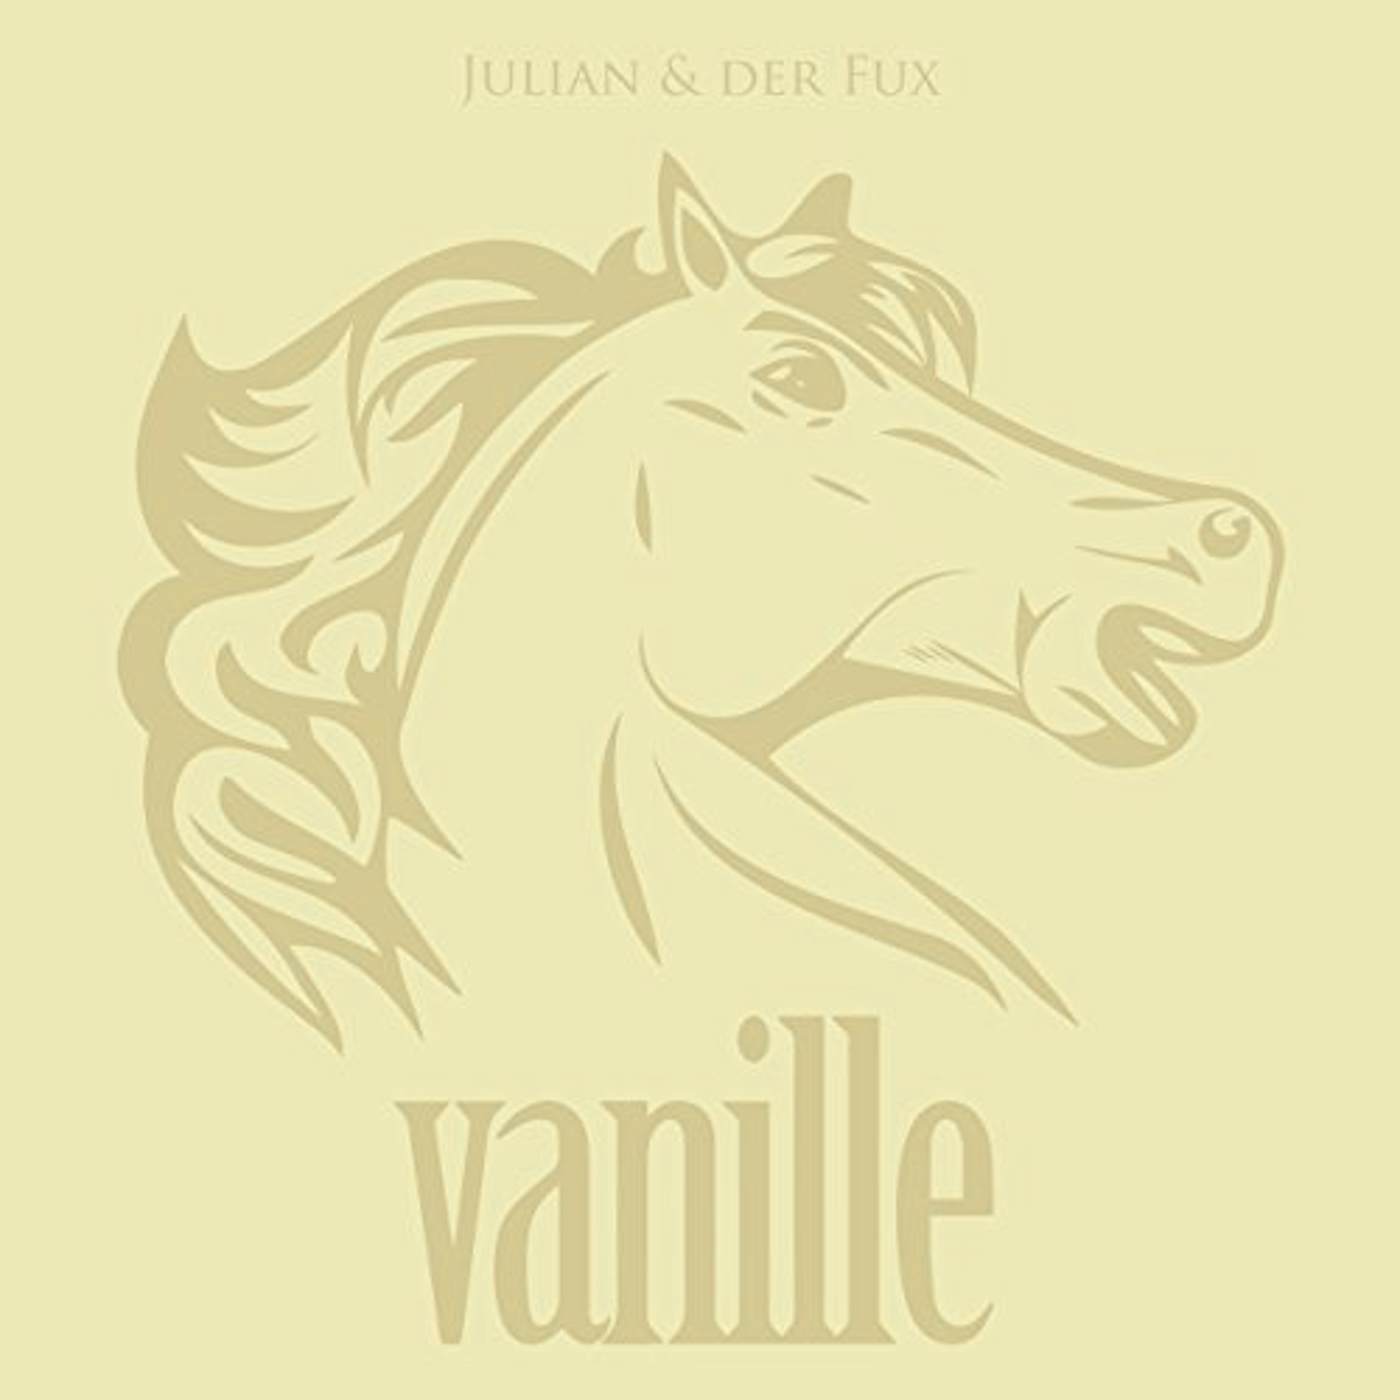 JULIAN & DER FUX Vanille Vinyl Record